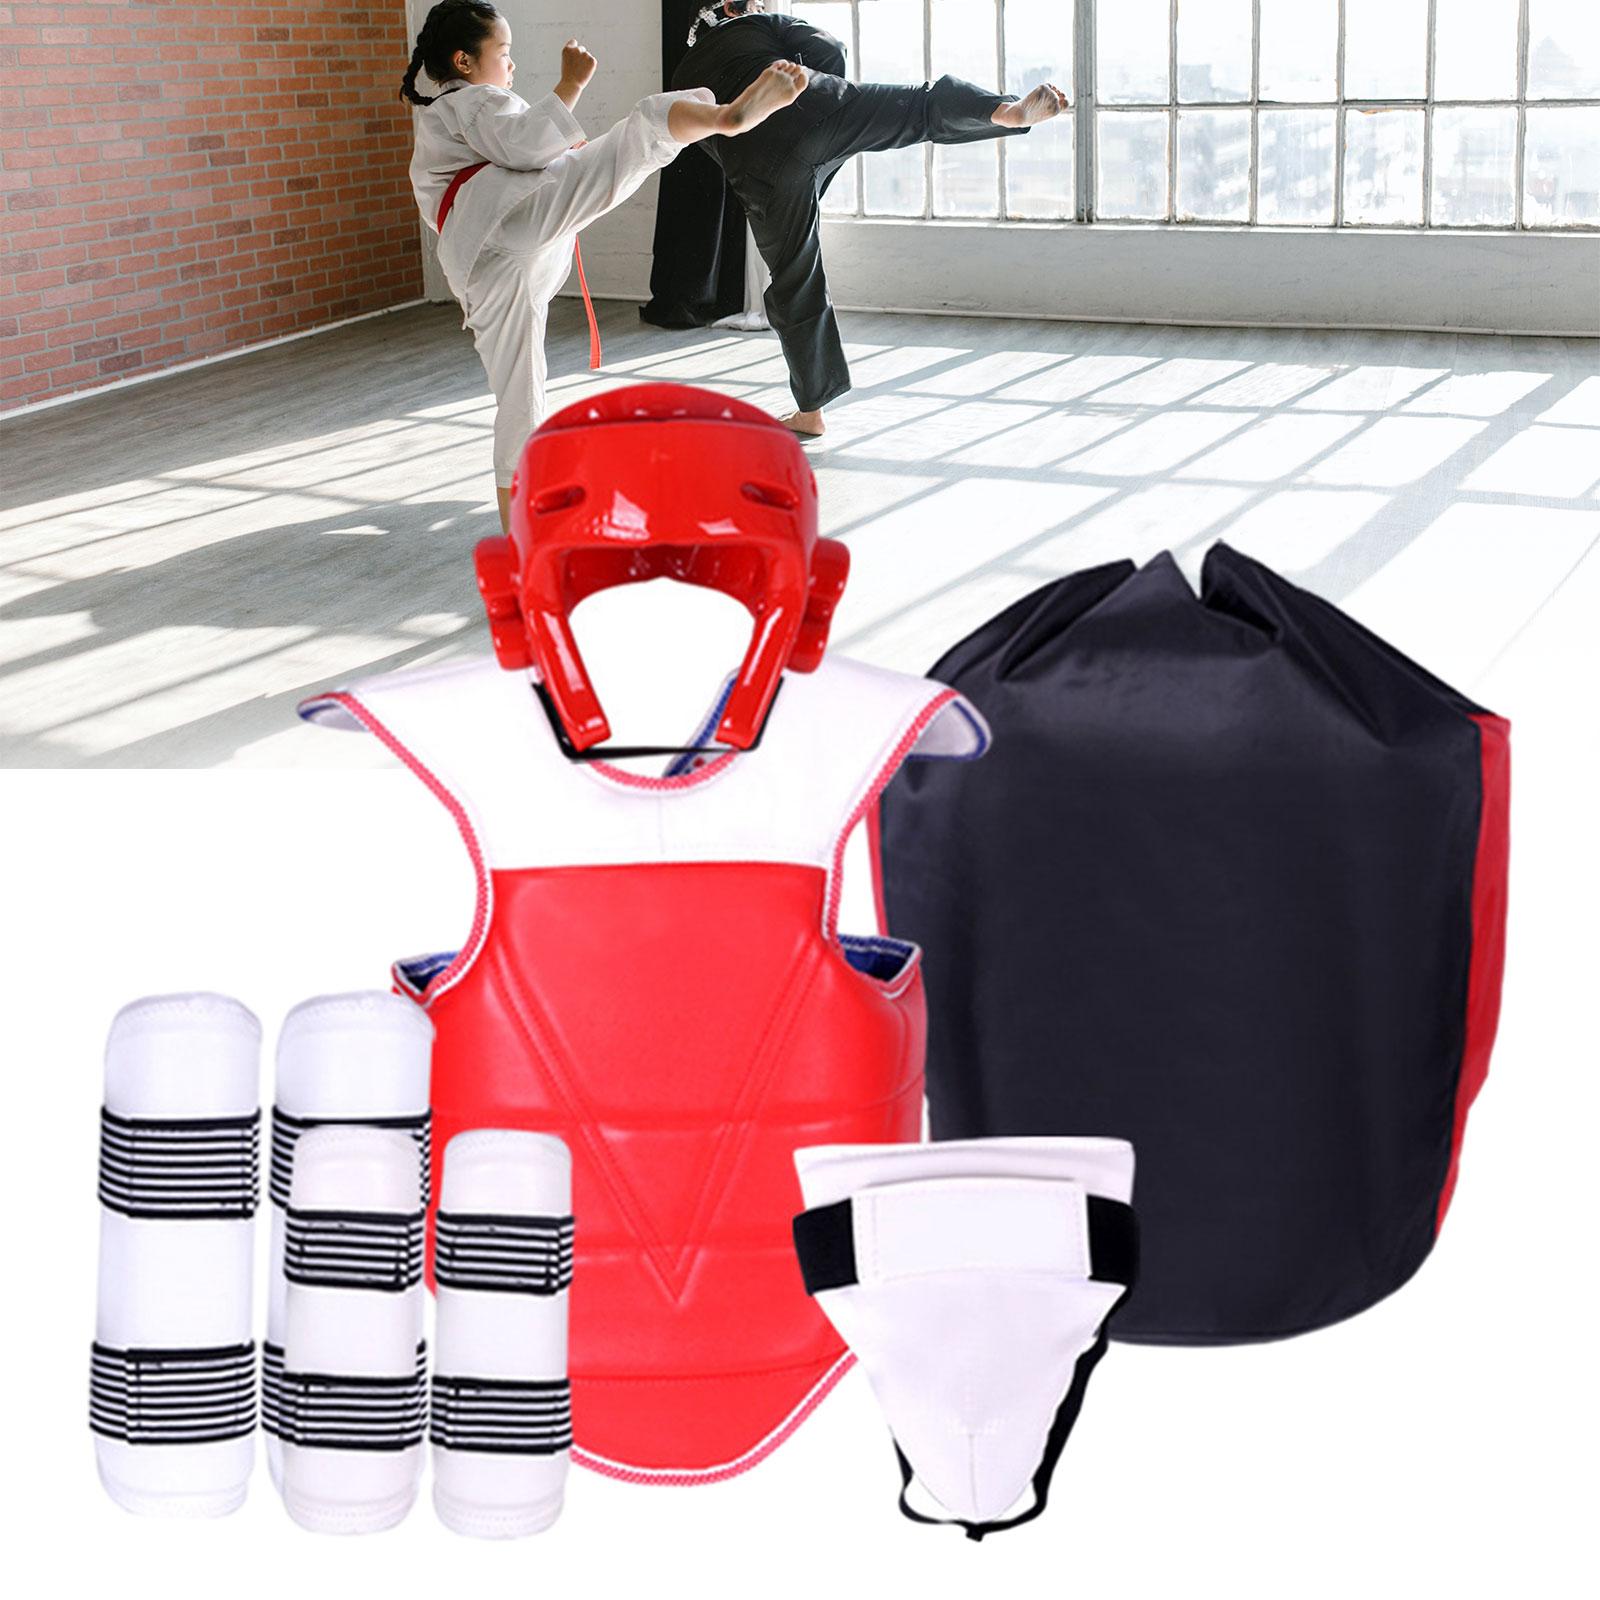 5Pcs Taekwondo Protective Gear for Martial Arts Sparring Training Muay Thai XL